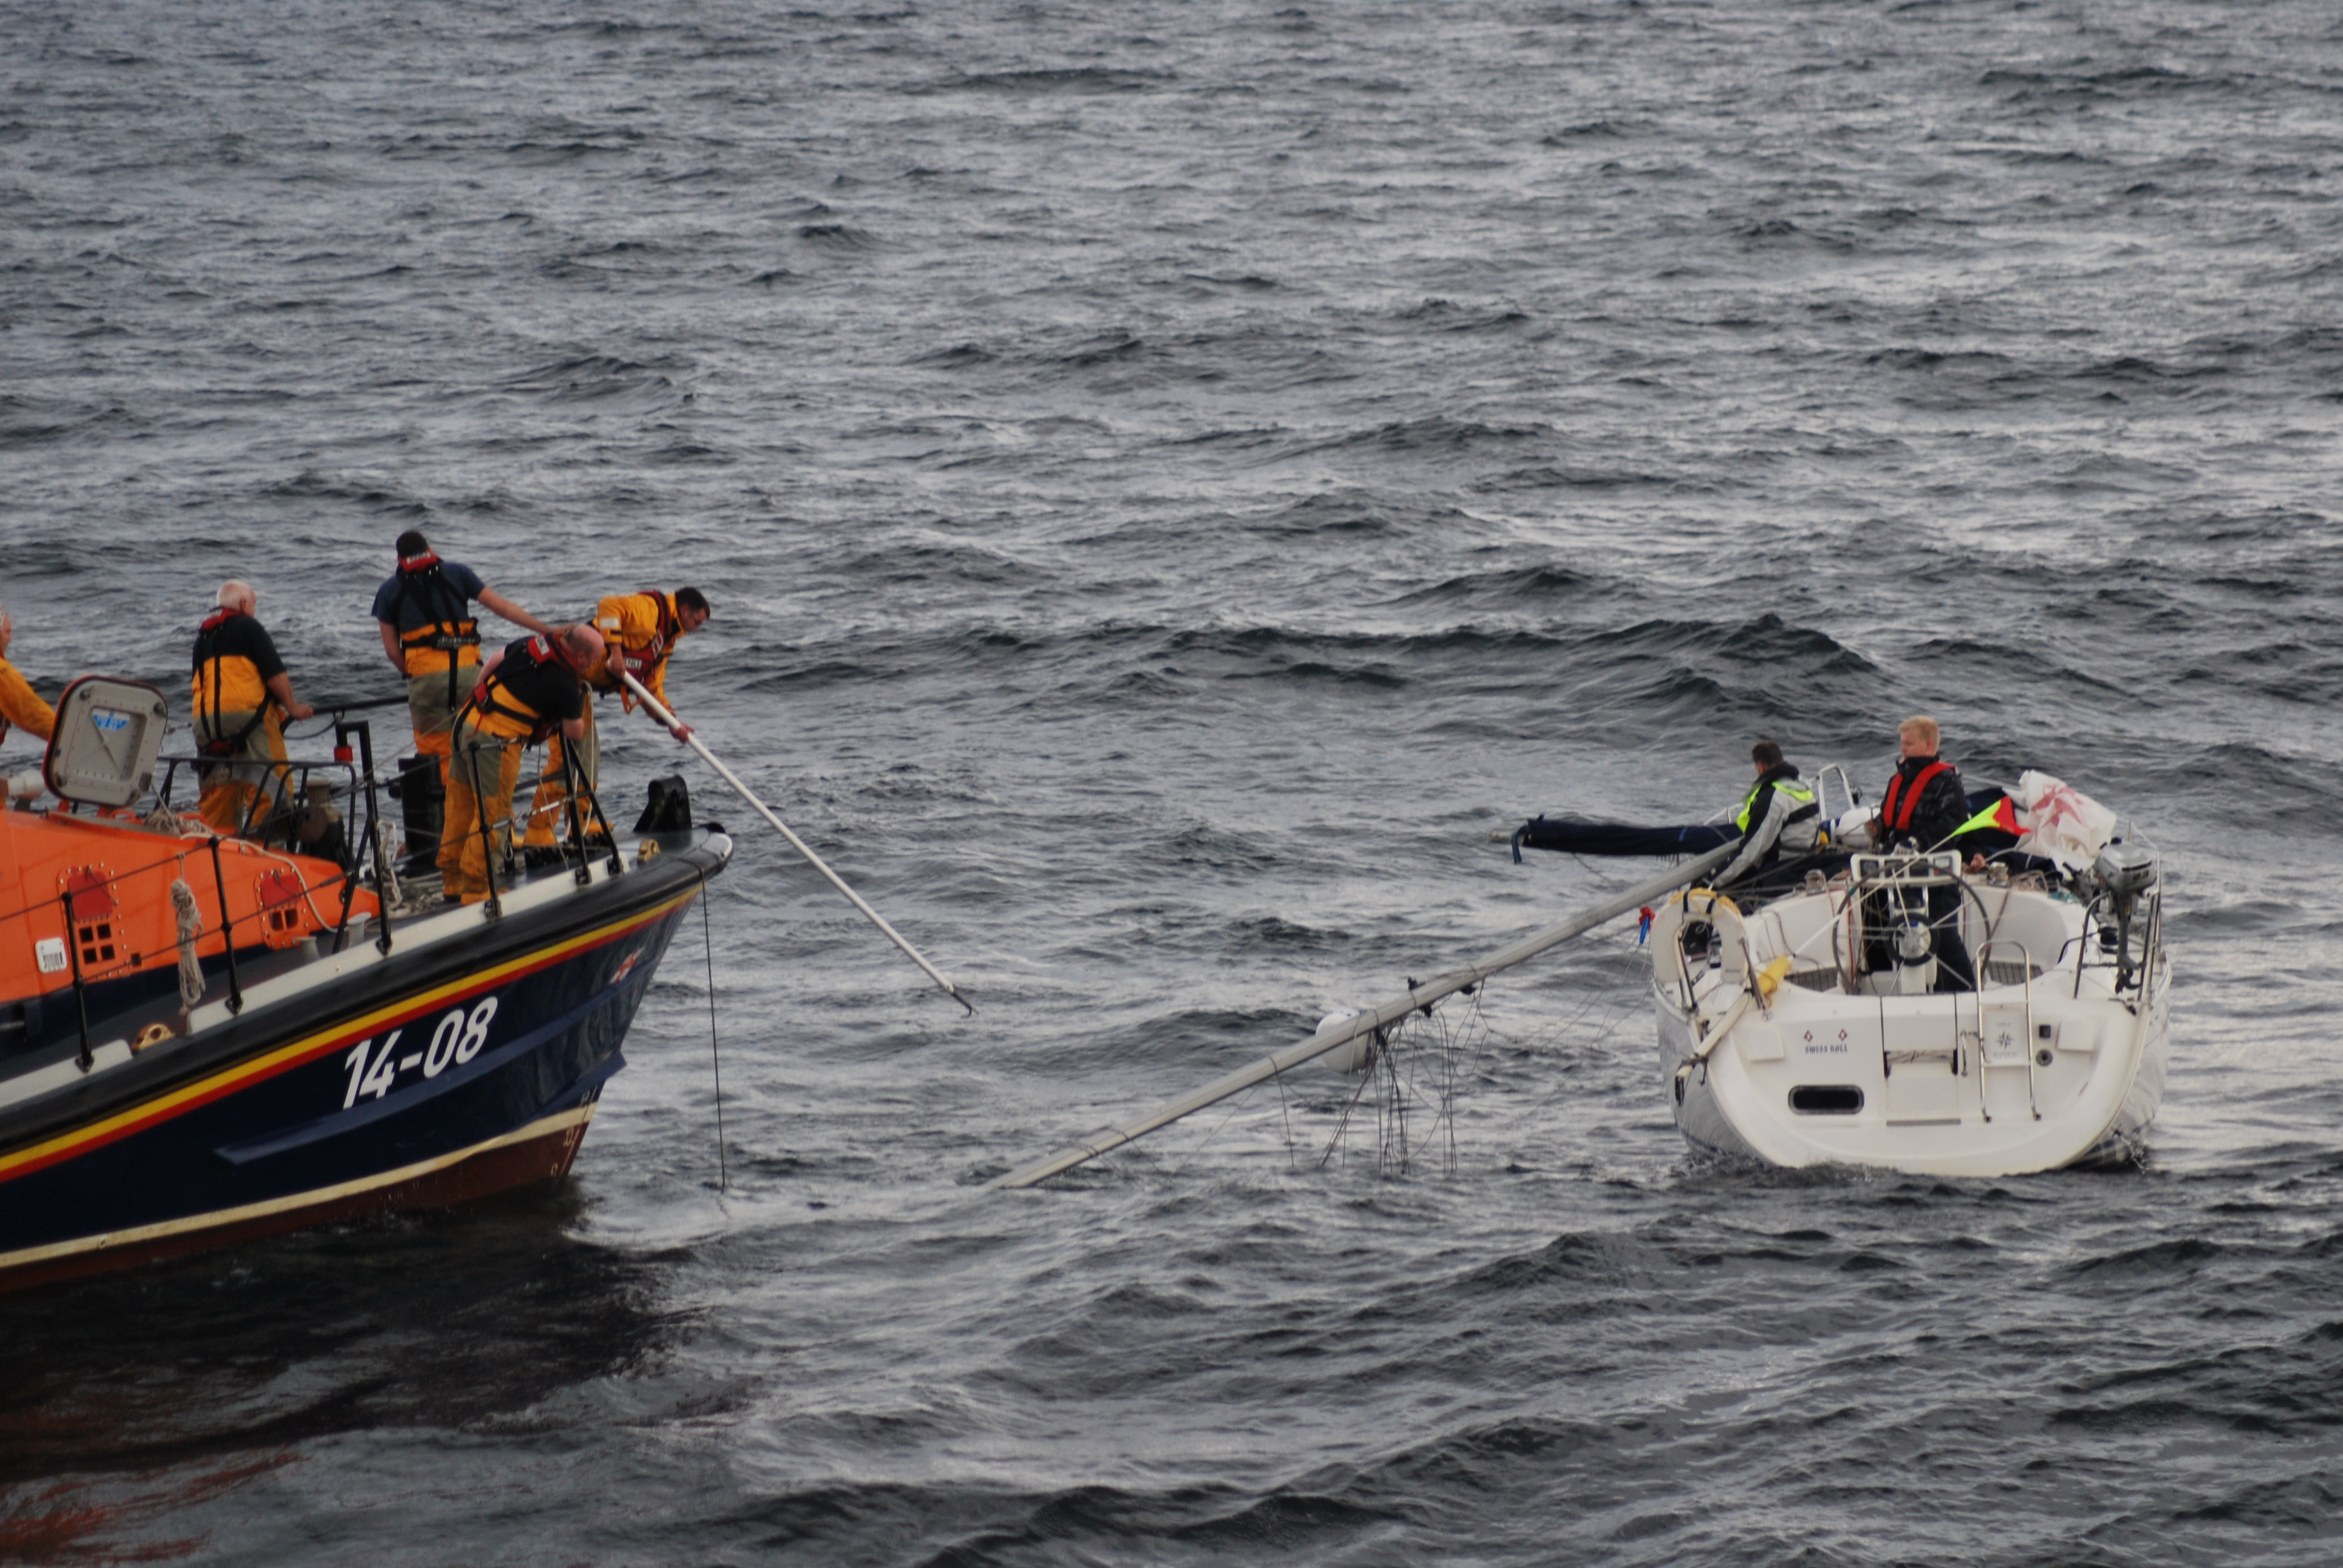 Invergordon Lifeboat crew helps the Shosoni